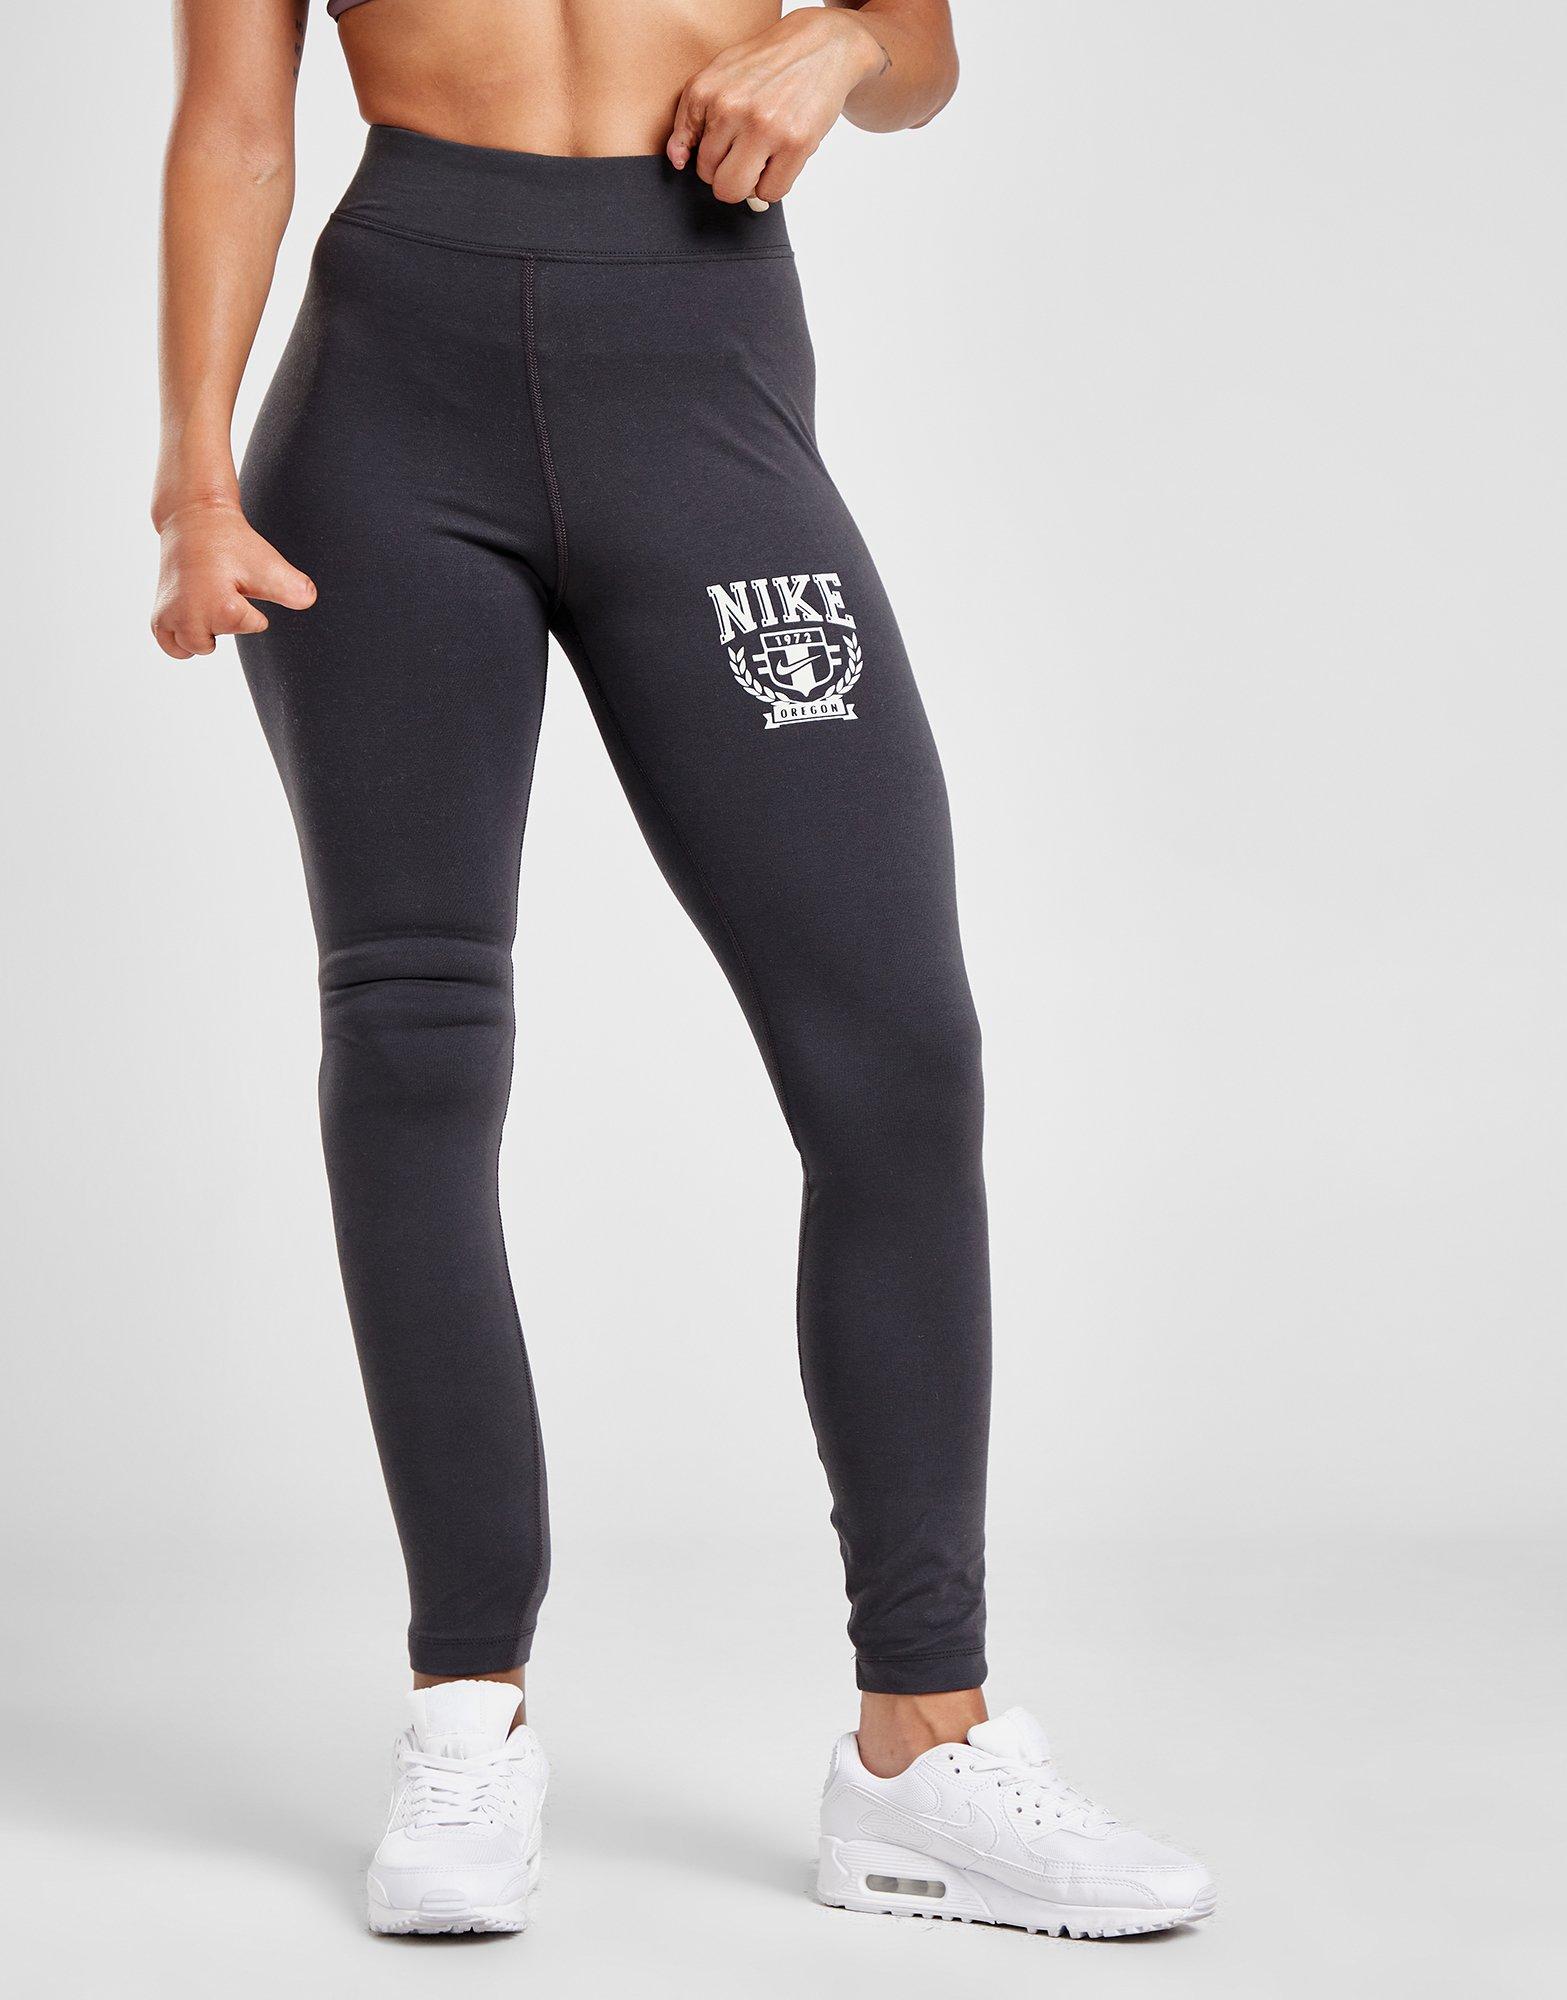 GUESS Jeans Logo Legging Leggings Athletic Pants Track NWT Yoga XS S M L XL  